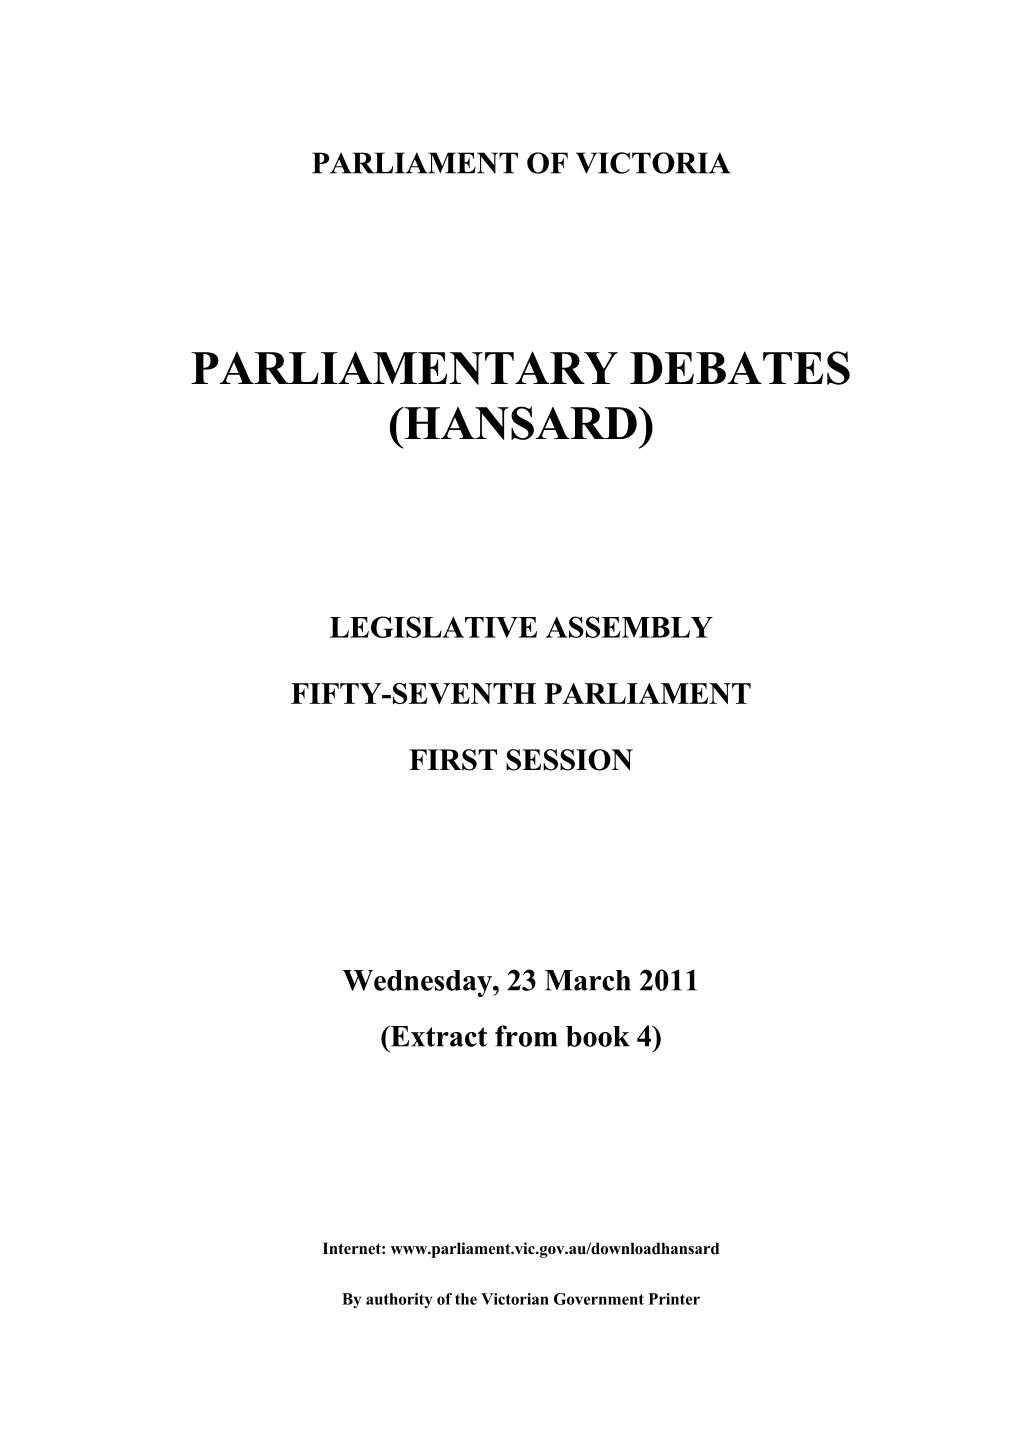 Parliament of Victoria – Parliamentary Debates (Hansard)